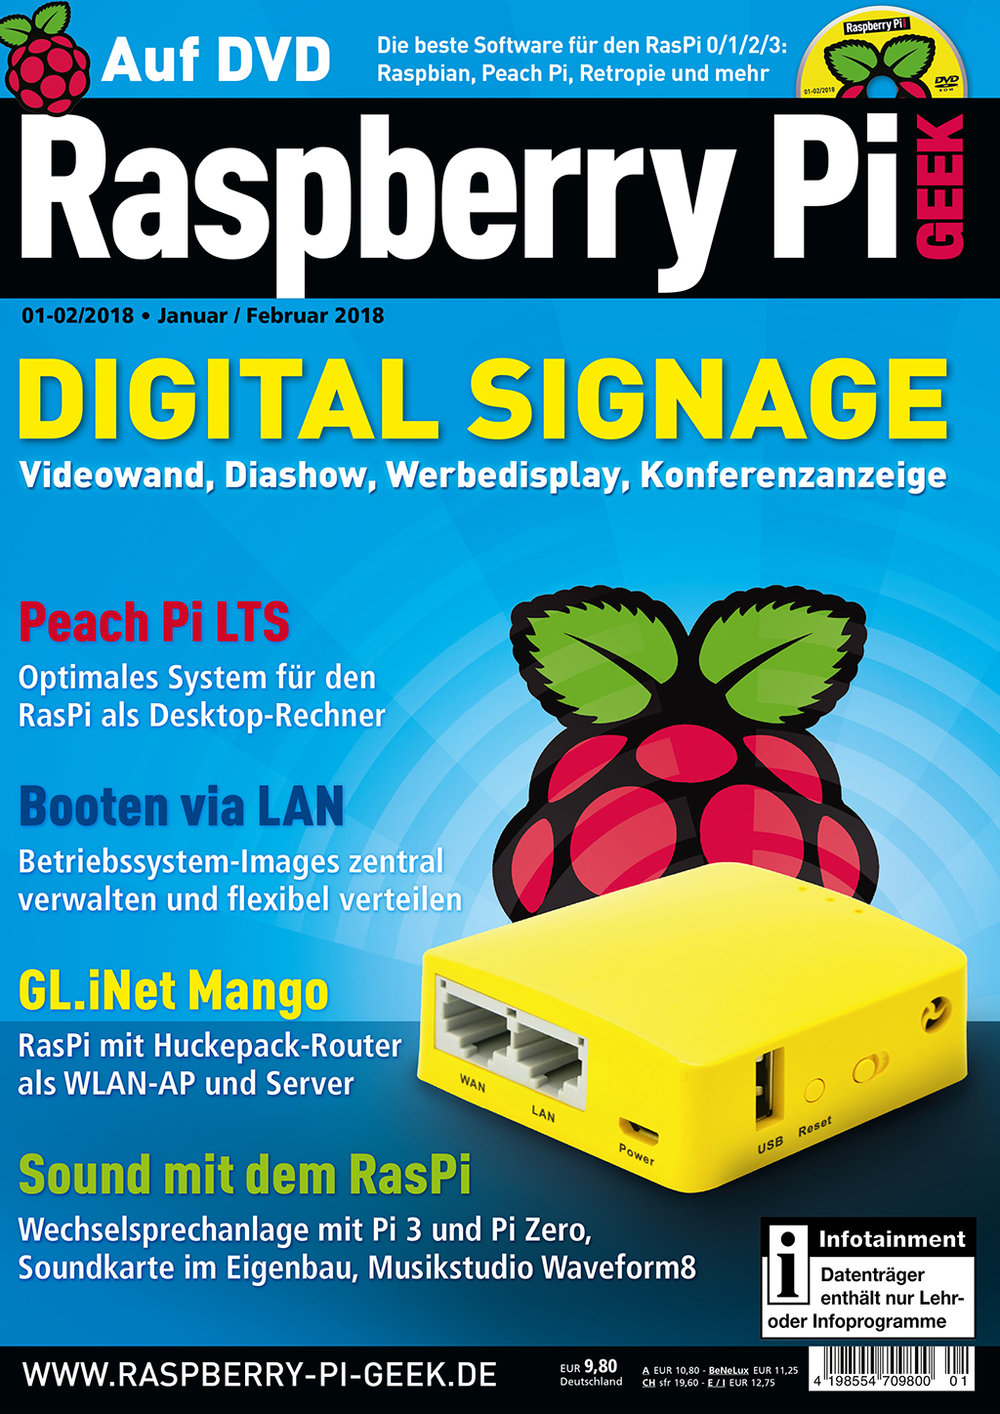 Raspberry Pi Geek ePaper 02/2018